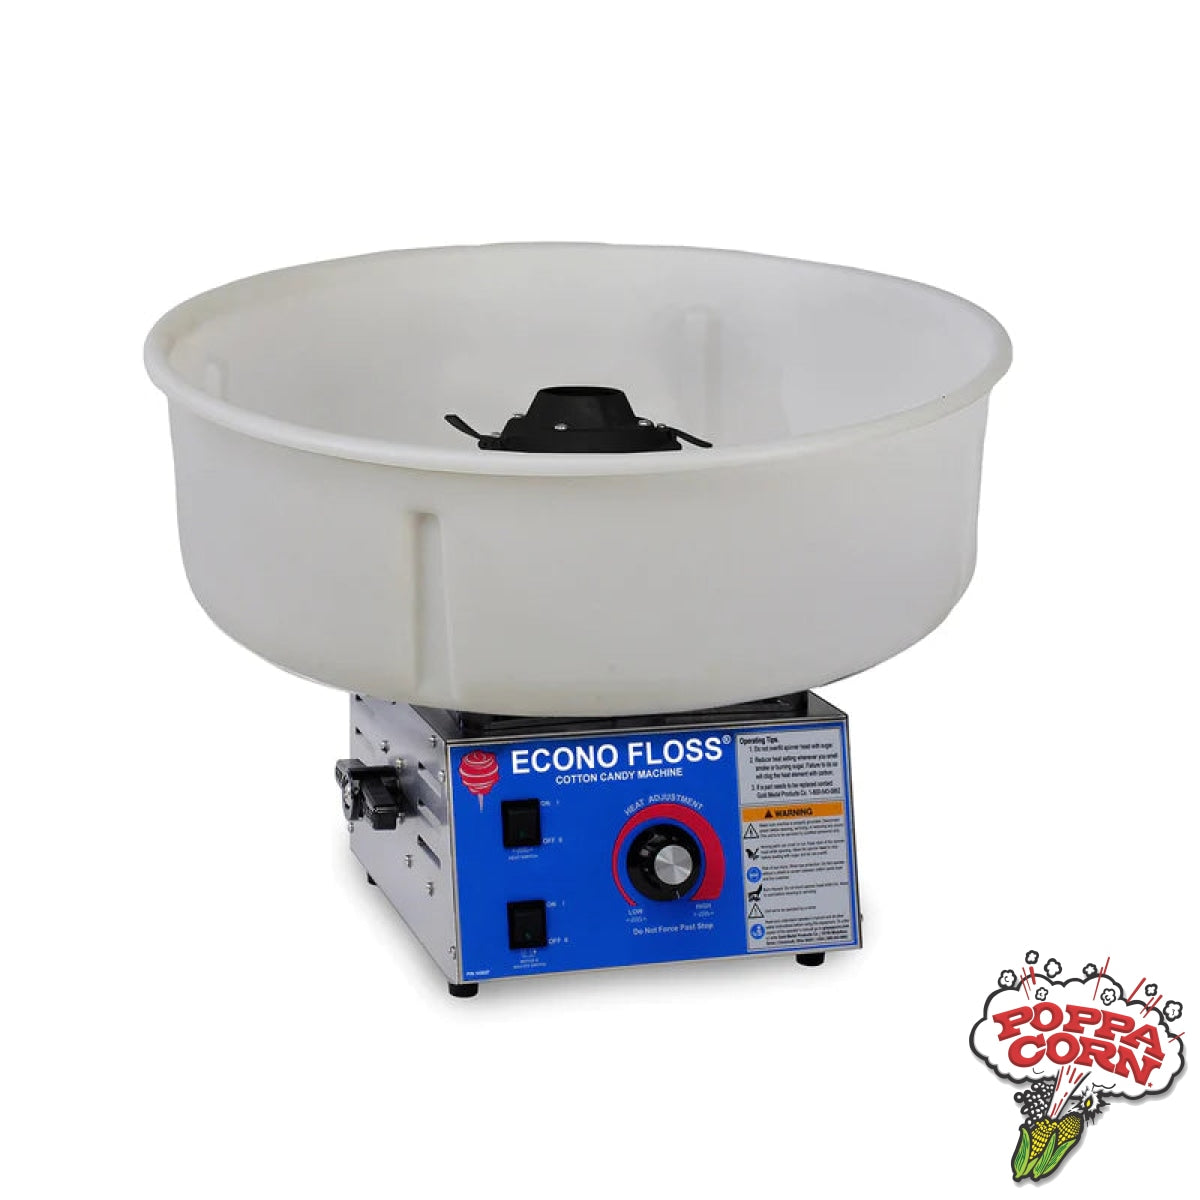 Econo Floss® with Non-Metallic Floss Pan Cotton Candy Machine - GM3017-00-010 - Poppa Corn Corp